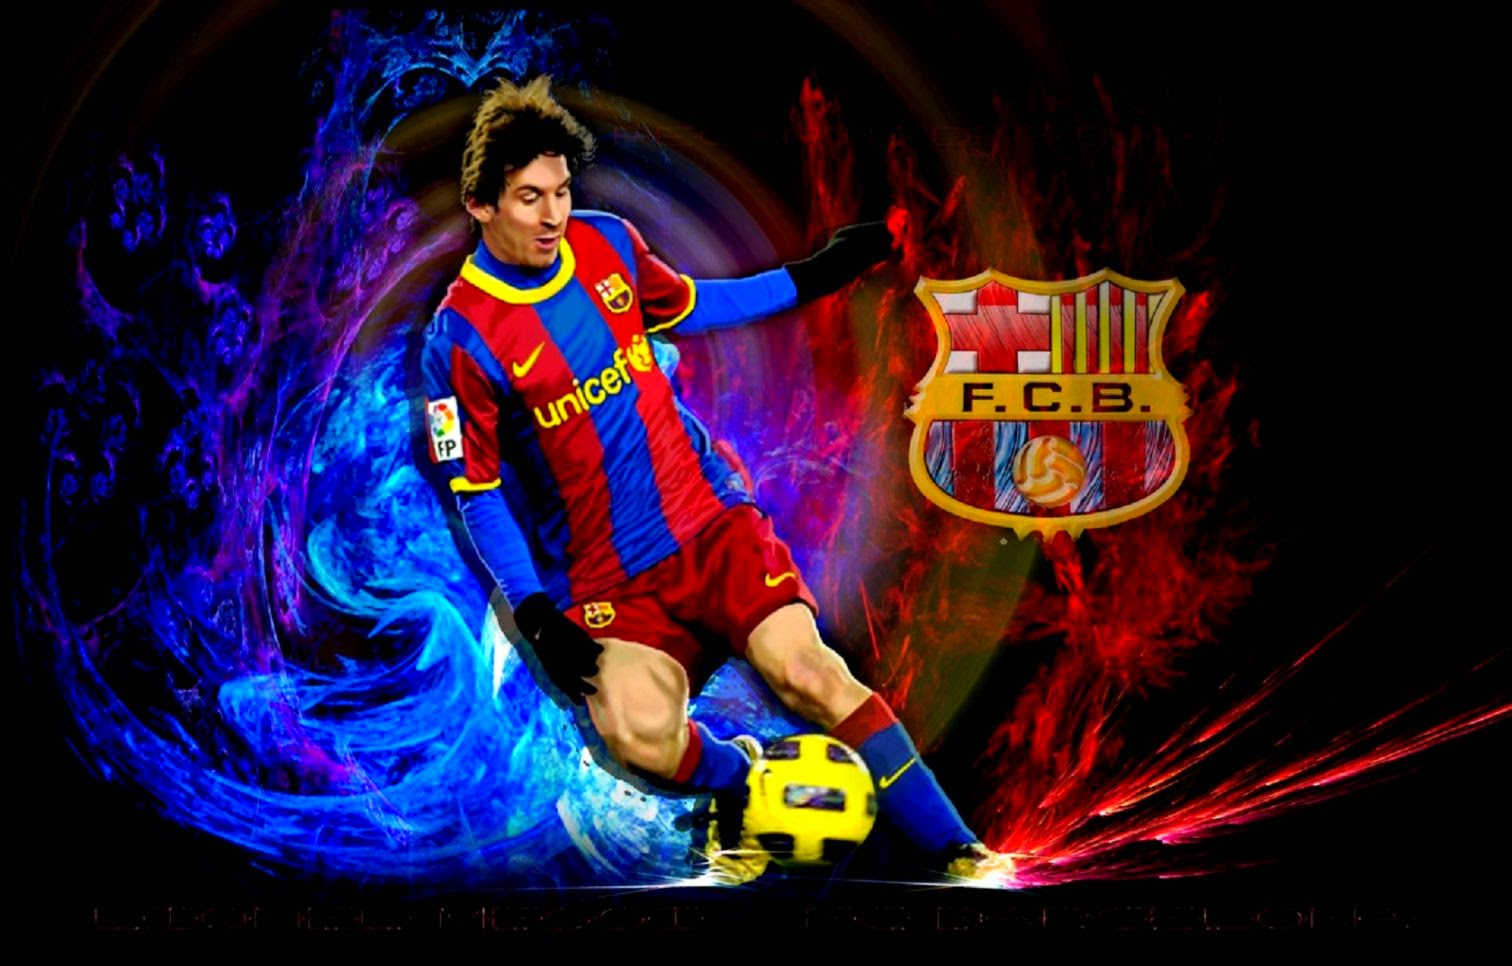 Wallpaper Hd Football Messi